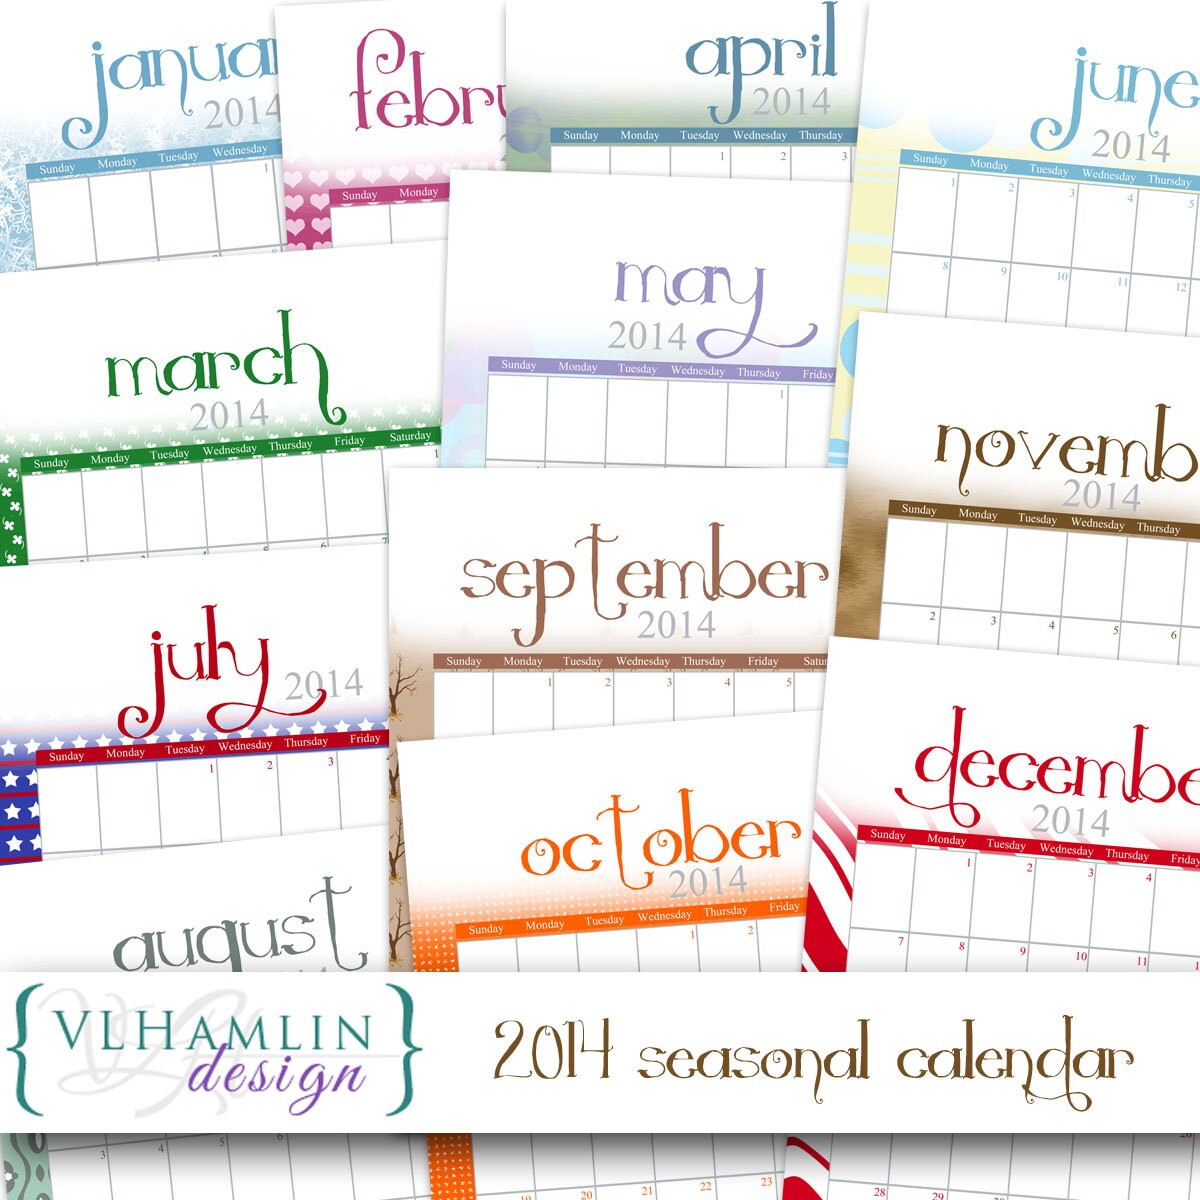 2014-printable-calendar-seasonal-monthly-by-vlhamlindesign